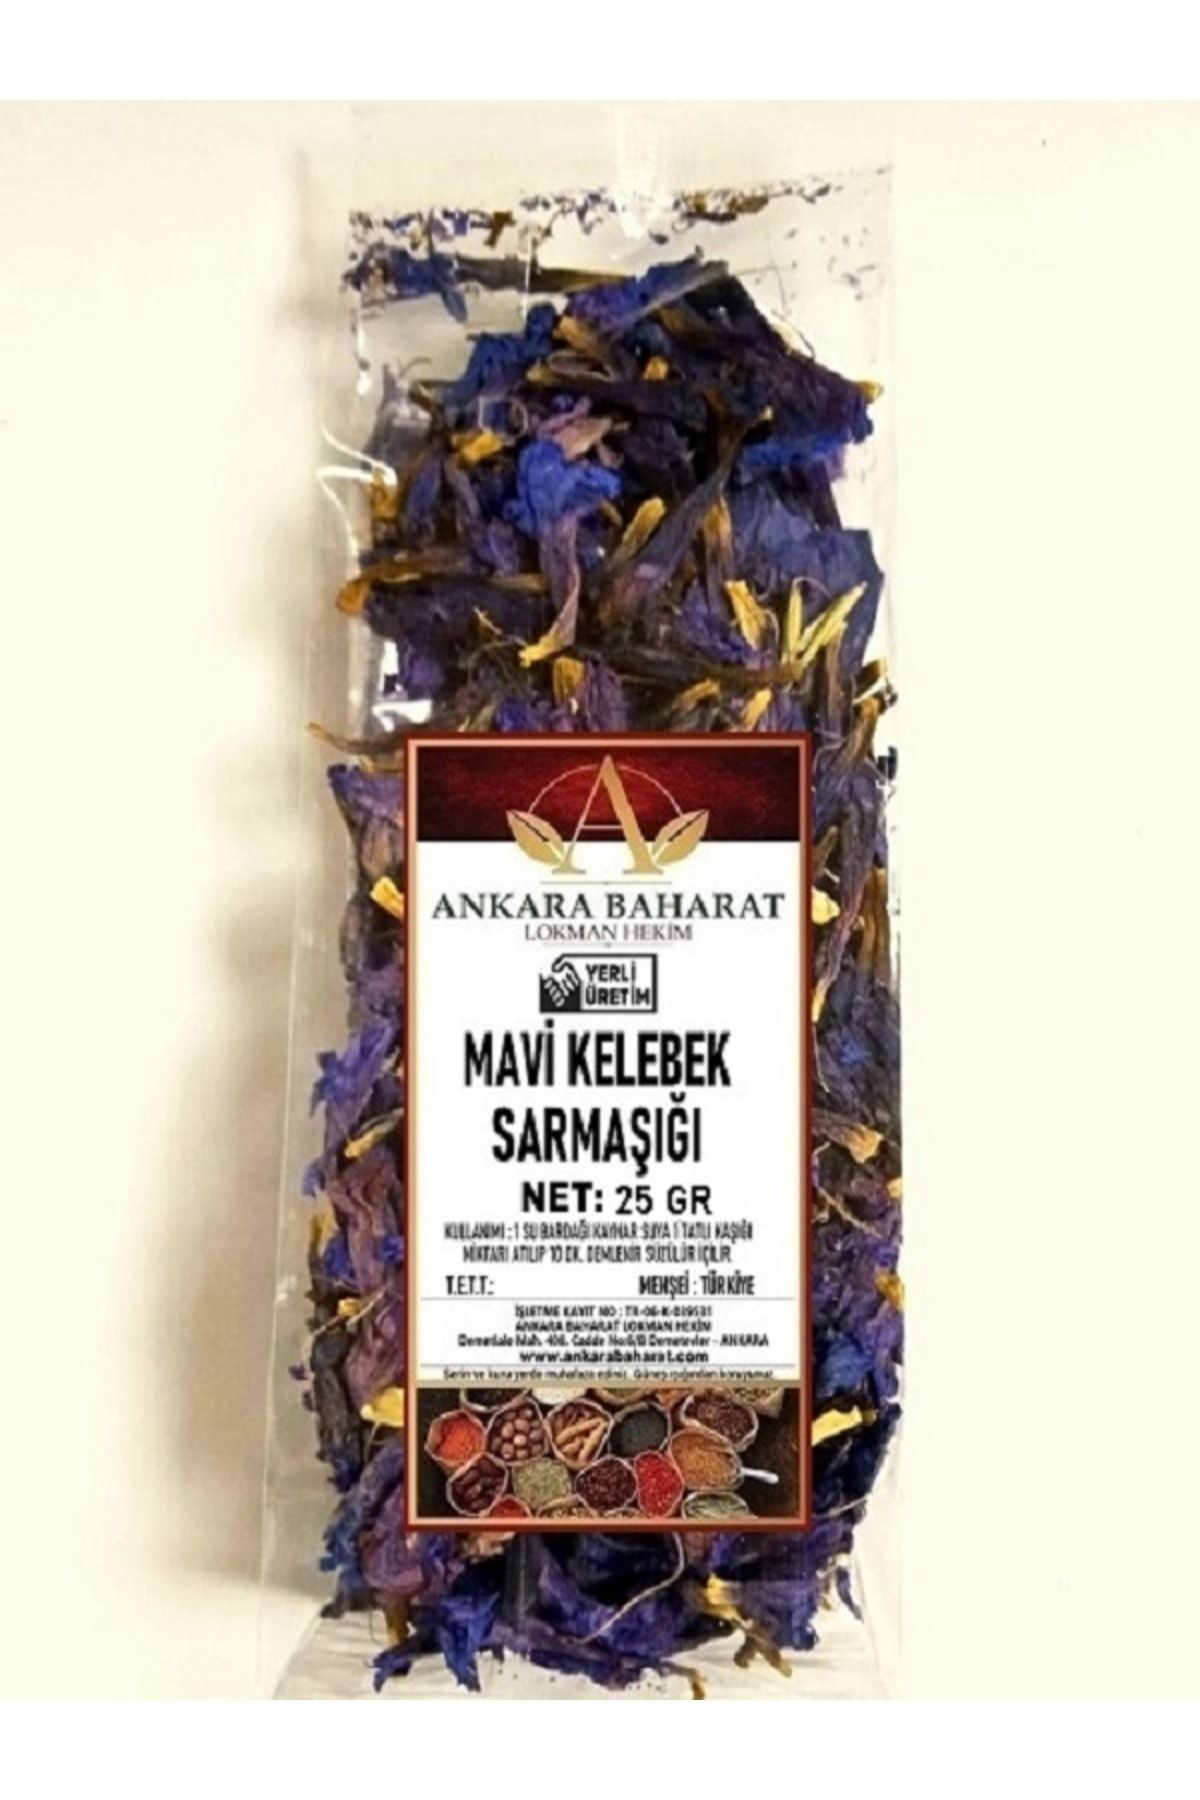 Ankara Baharat Mavi Çay - 25 gram - Mavi Kelebek Sarmaşığı